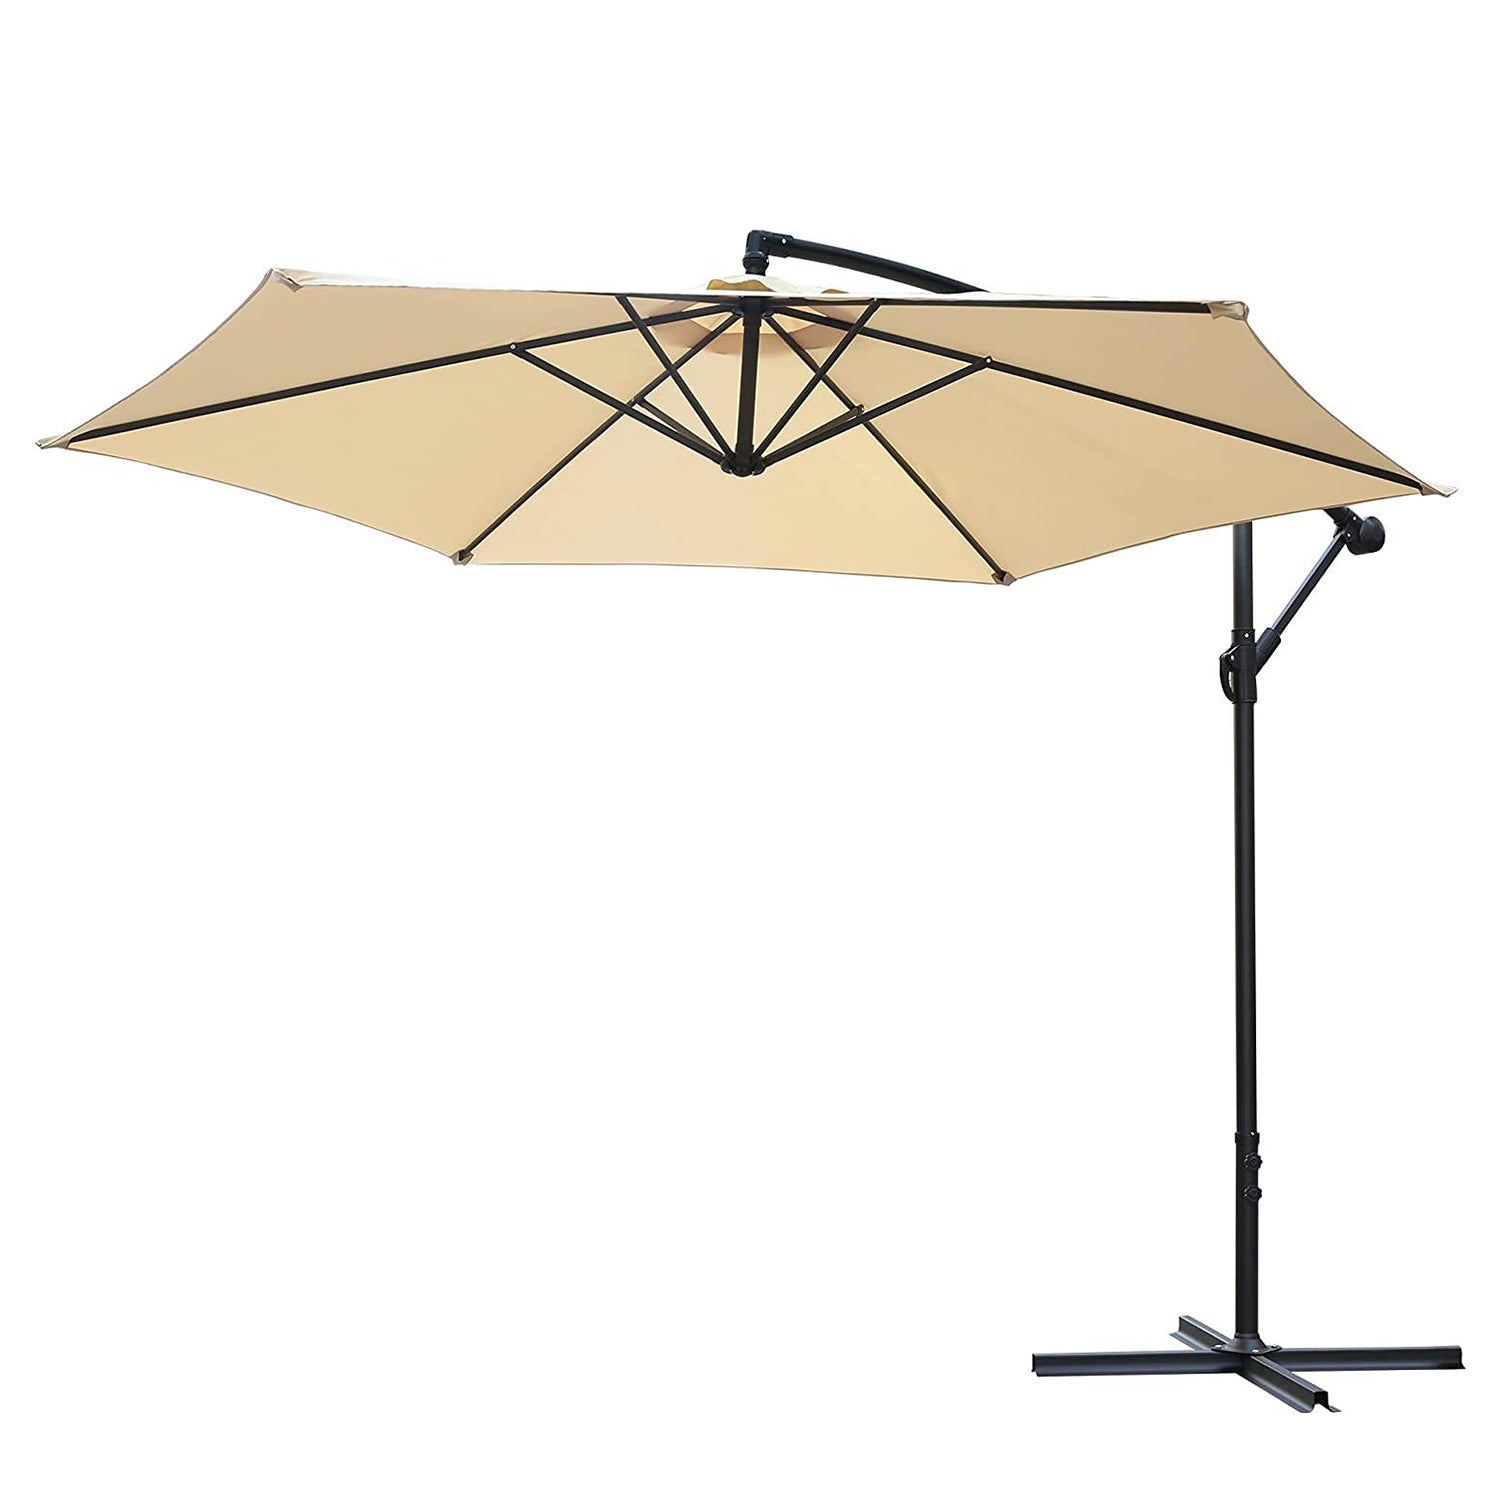 Patio Umbrella Outdoor Offset Hanging Umbrella with 6 Ribs and Crank, Beige